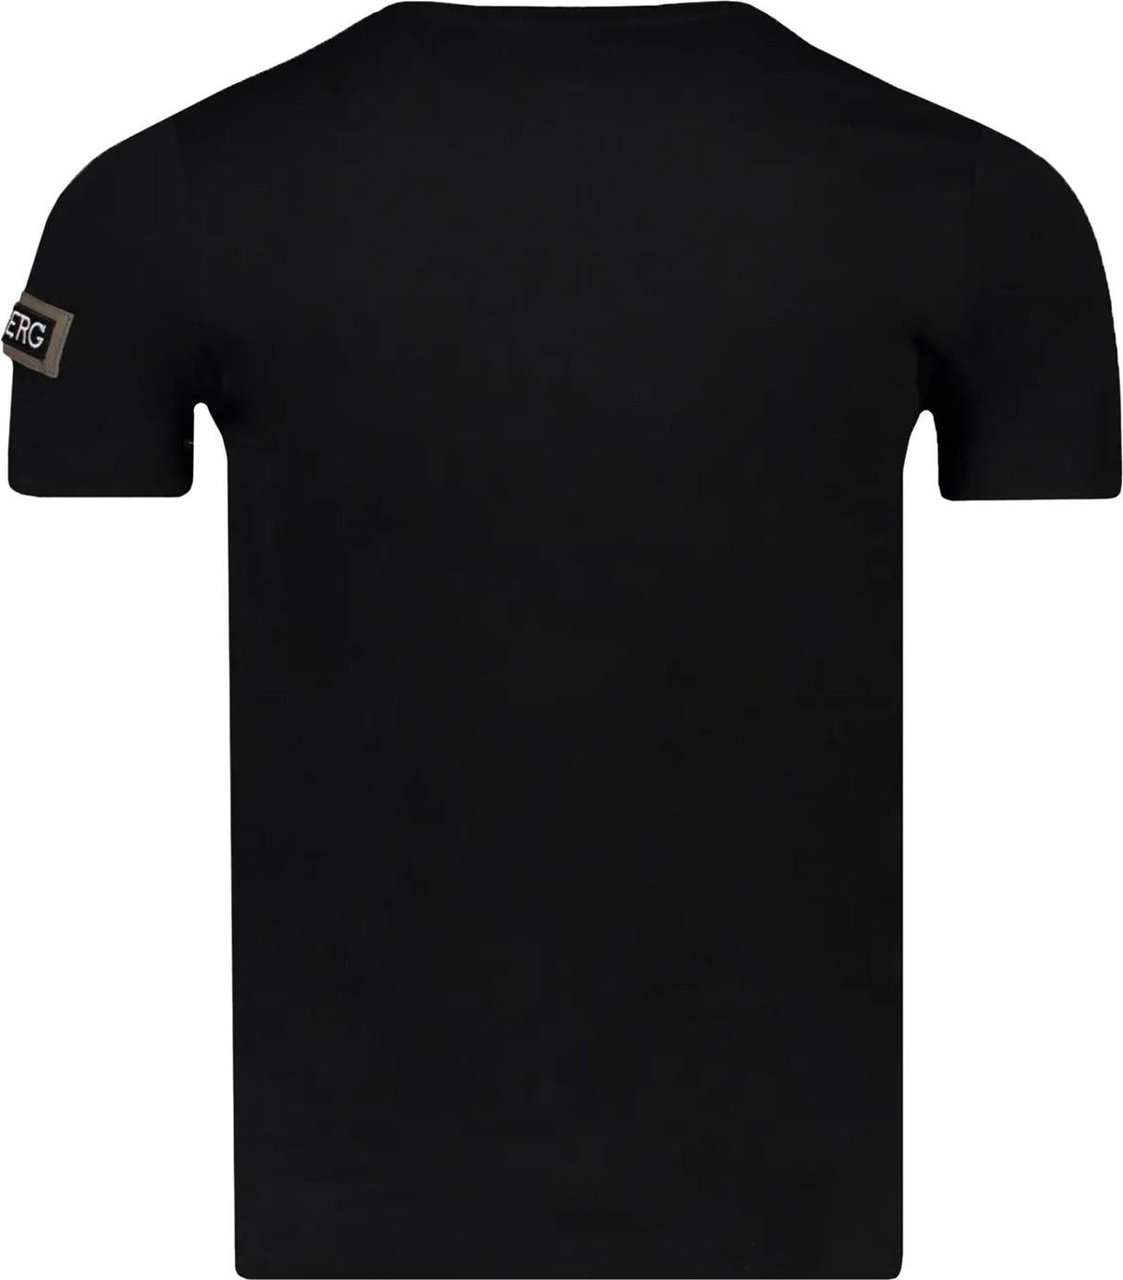 Iceberg T-shirt Zwart Zwart